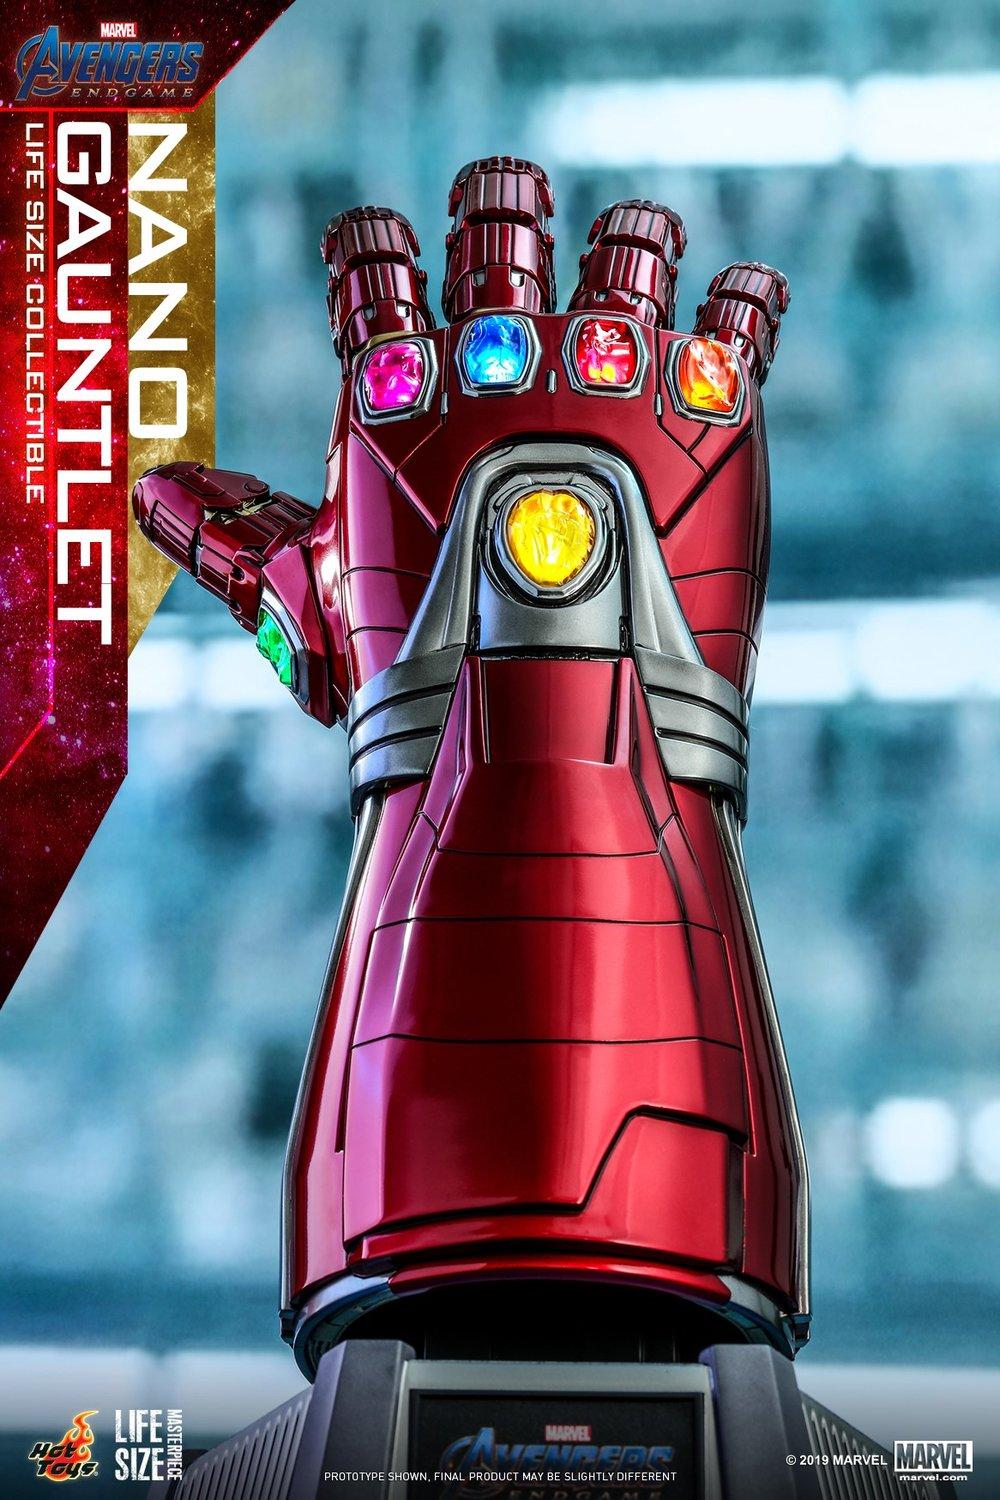 Hot Toys Reveals Tony Stark's Life Size AVENGERS: ENDGAME Nano